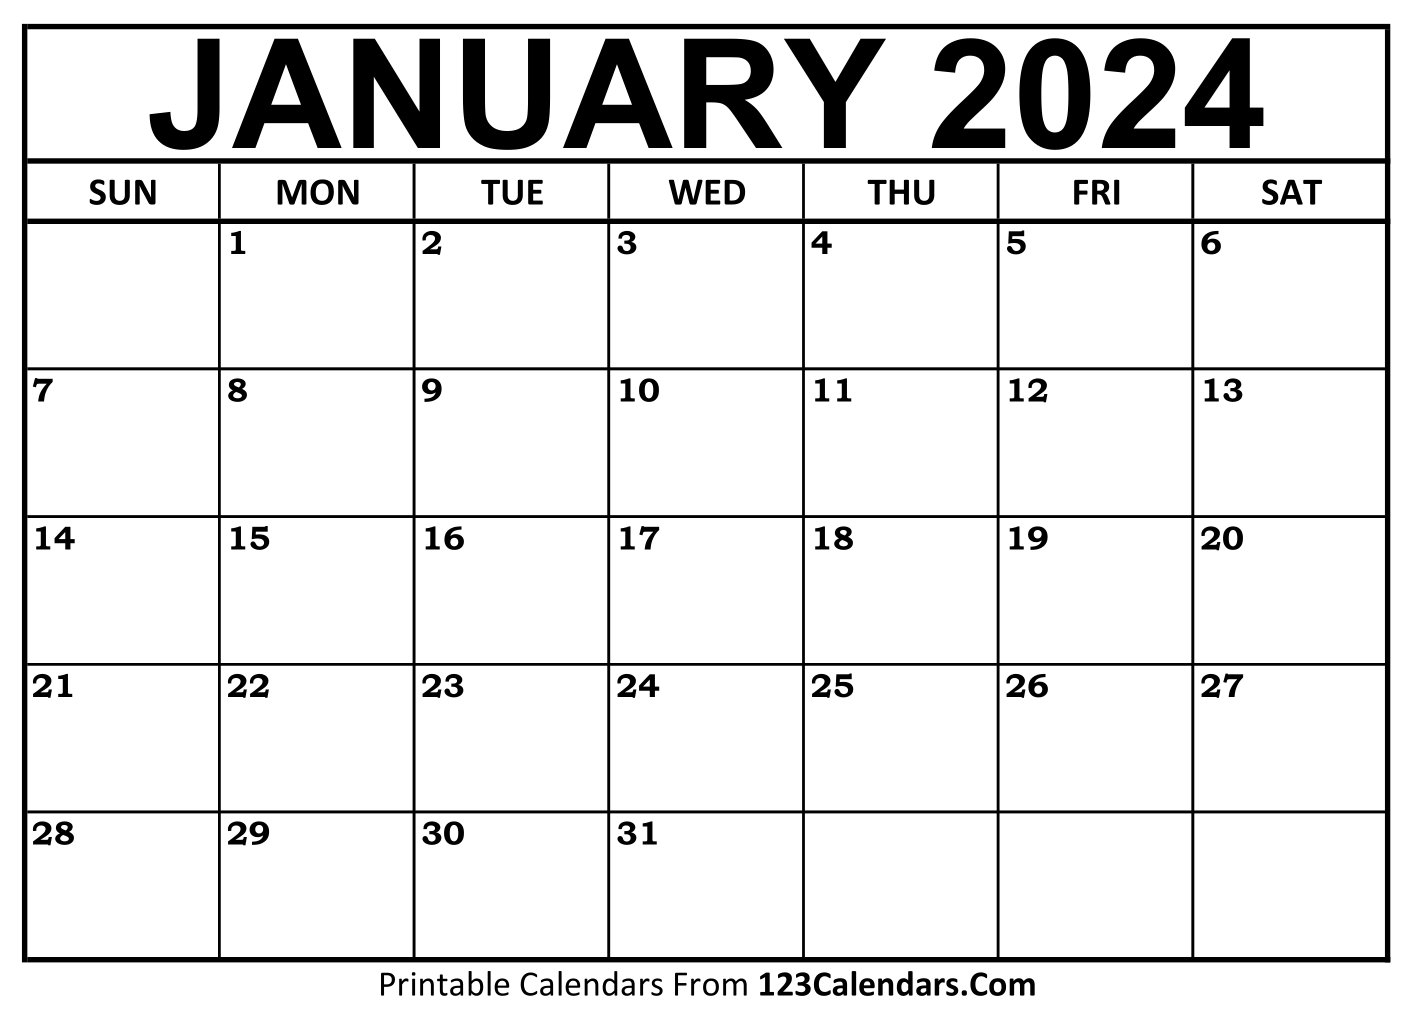 Printable January 2024 Calendar Templates - 123Calendars for Free Printable Calendar January 2024 Wiki